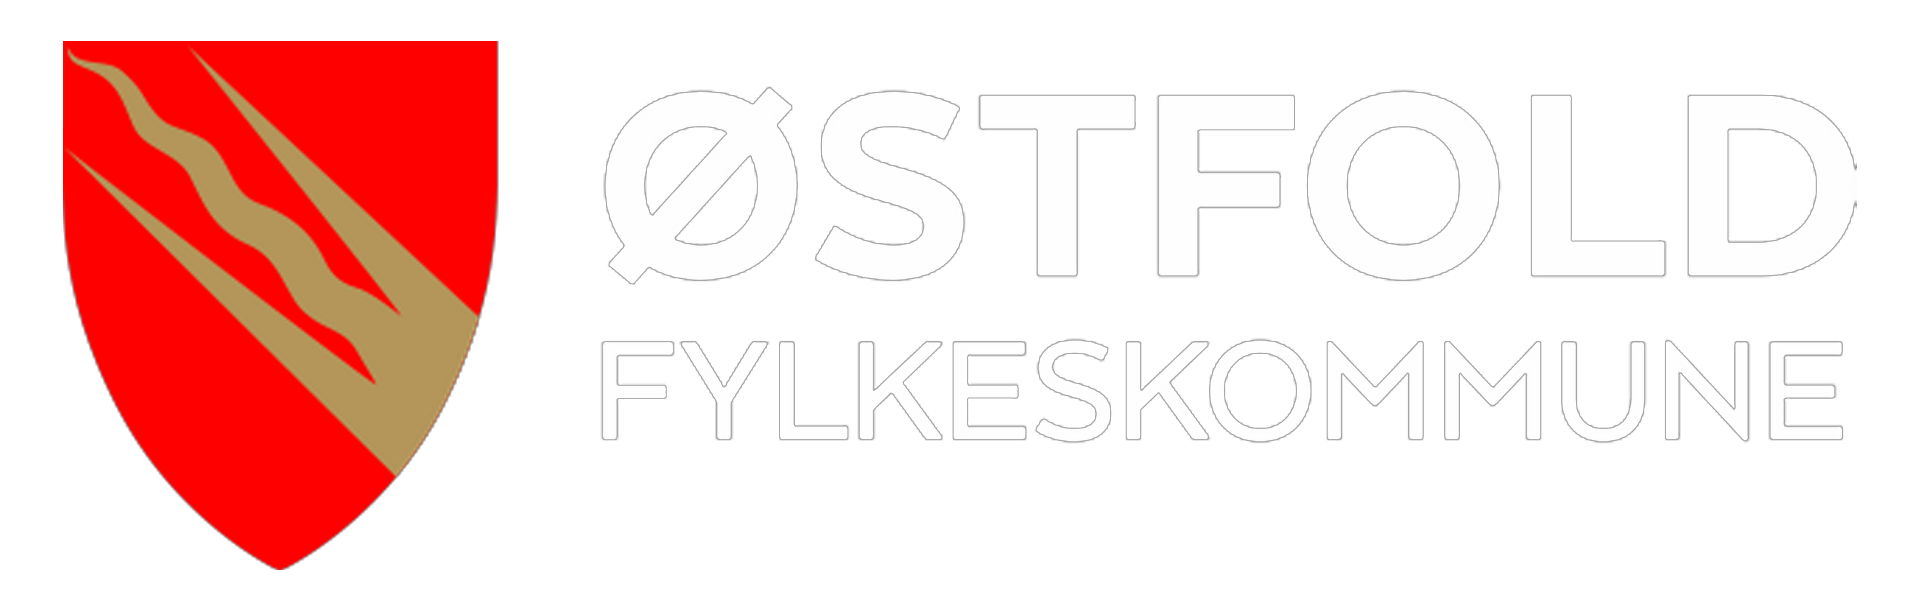 Østfold Fylkeskommune logo